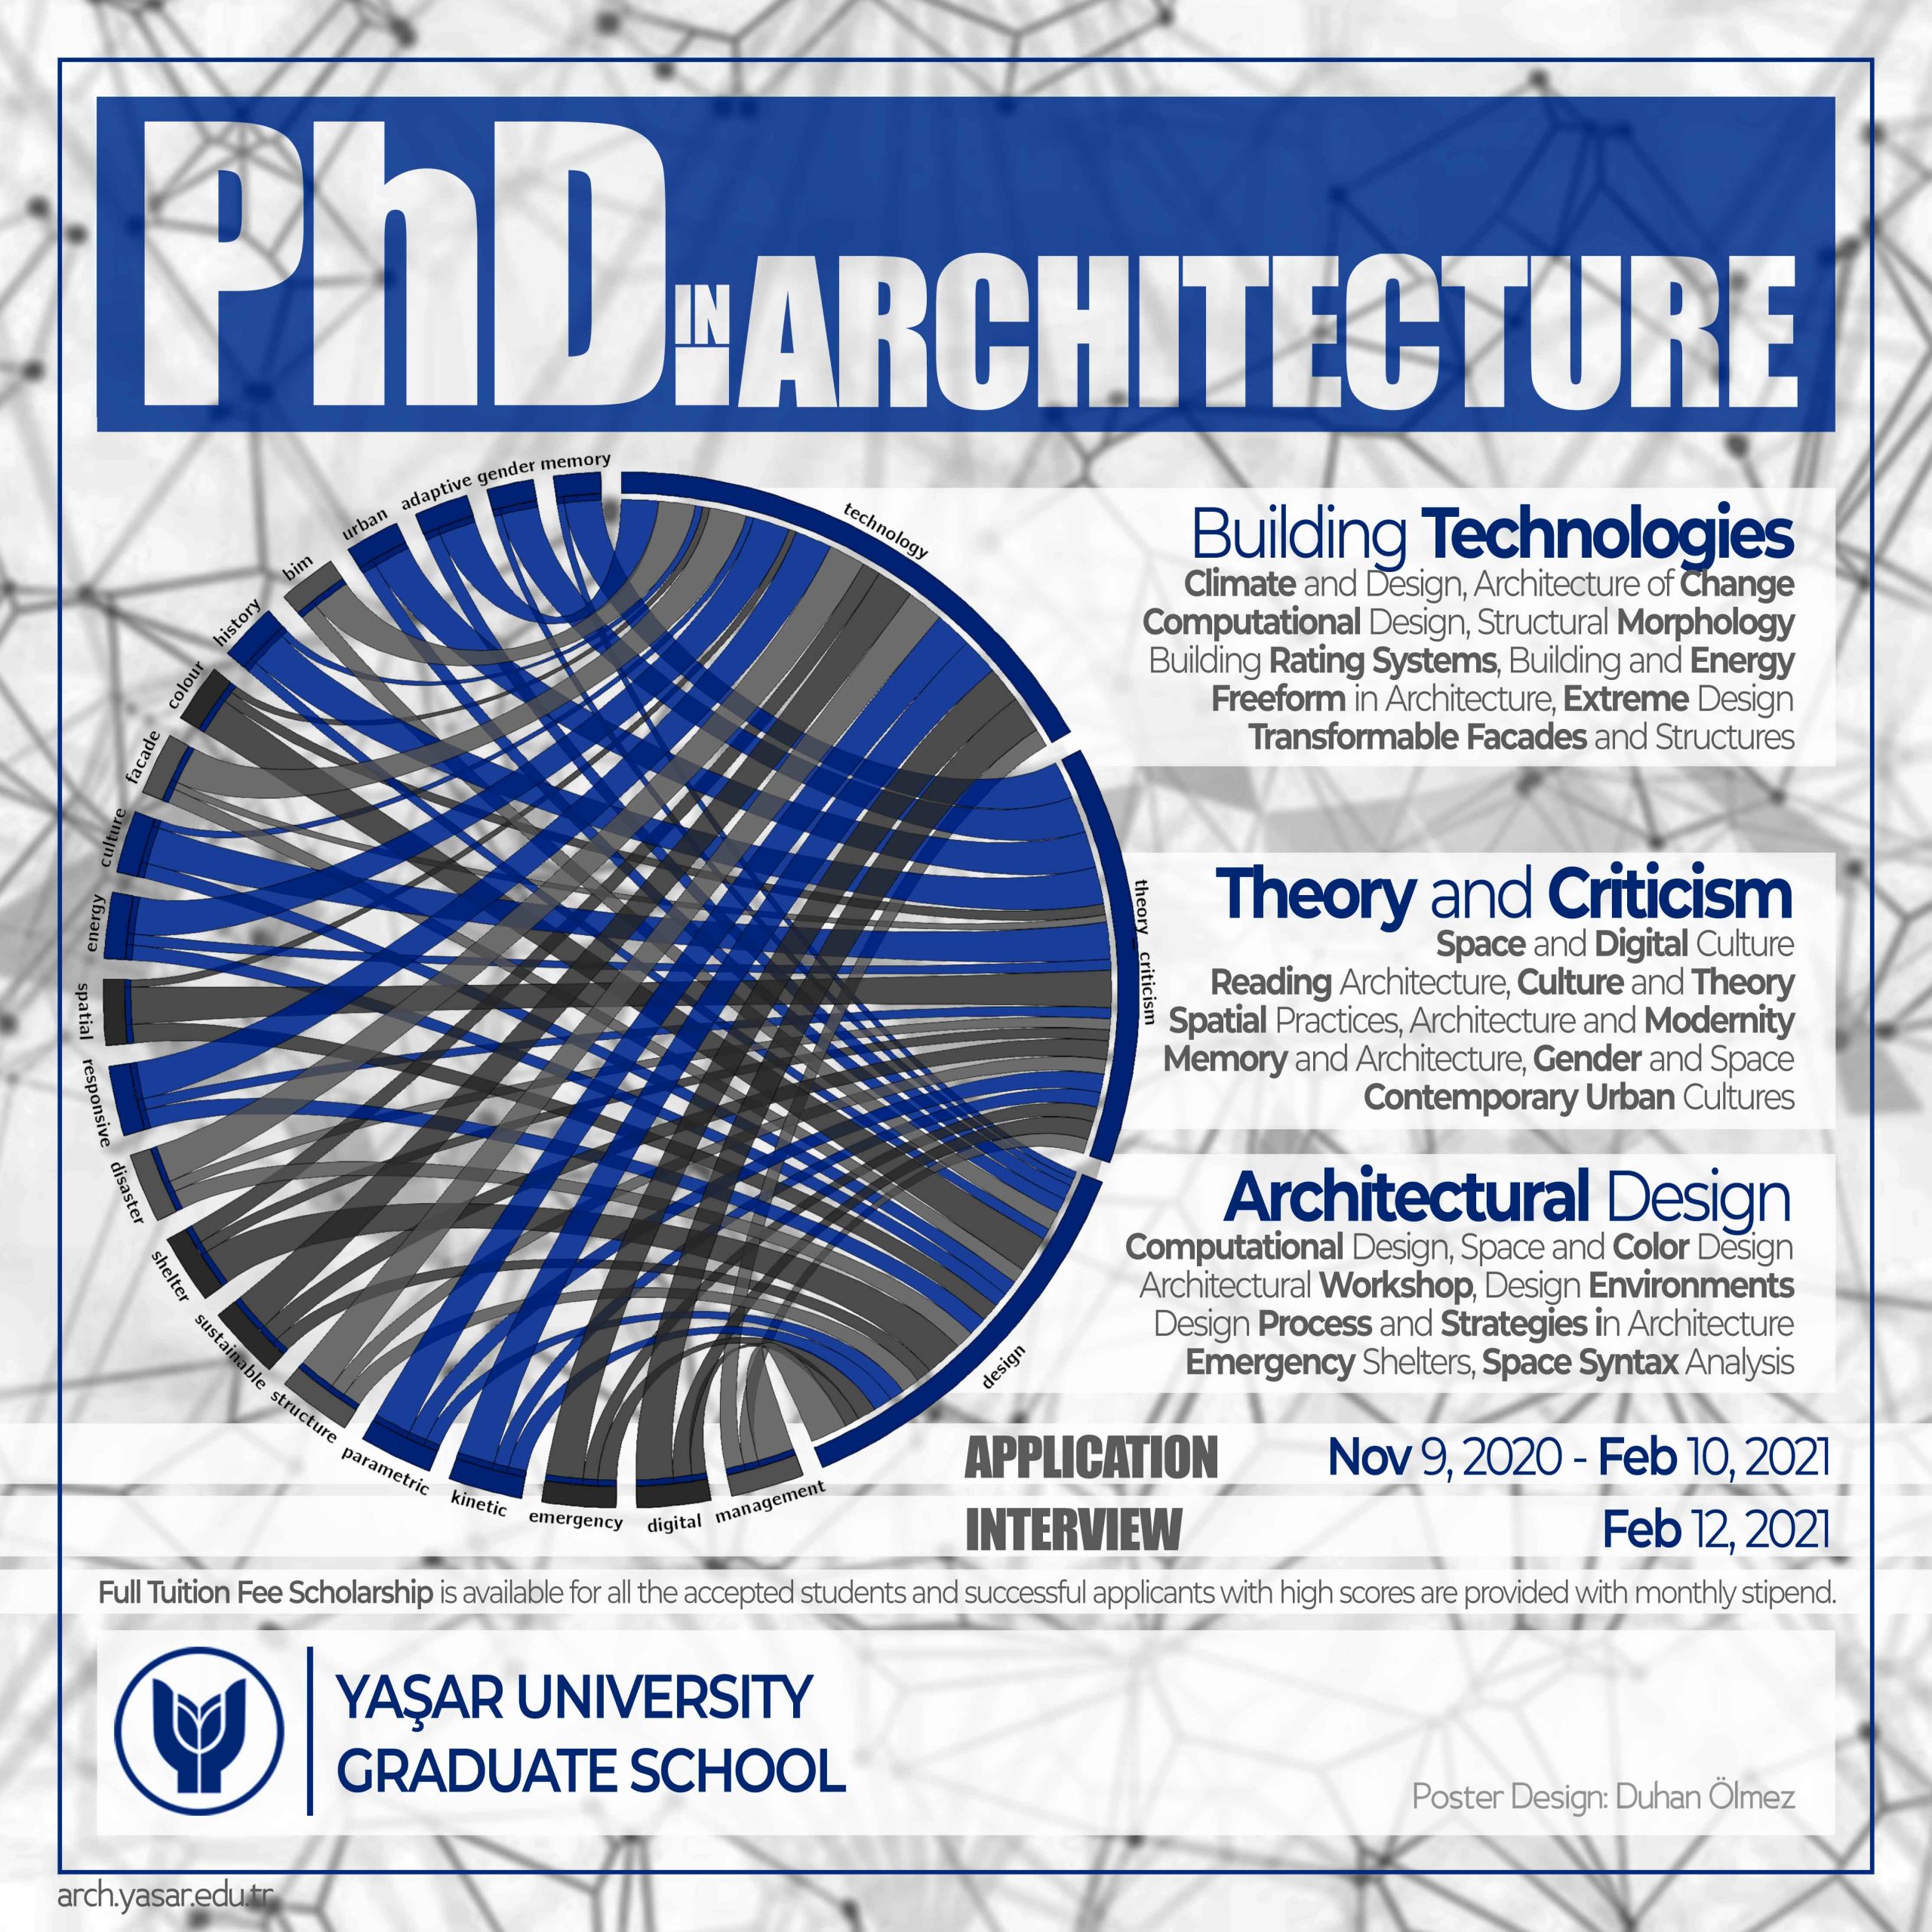 phd architecture association